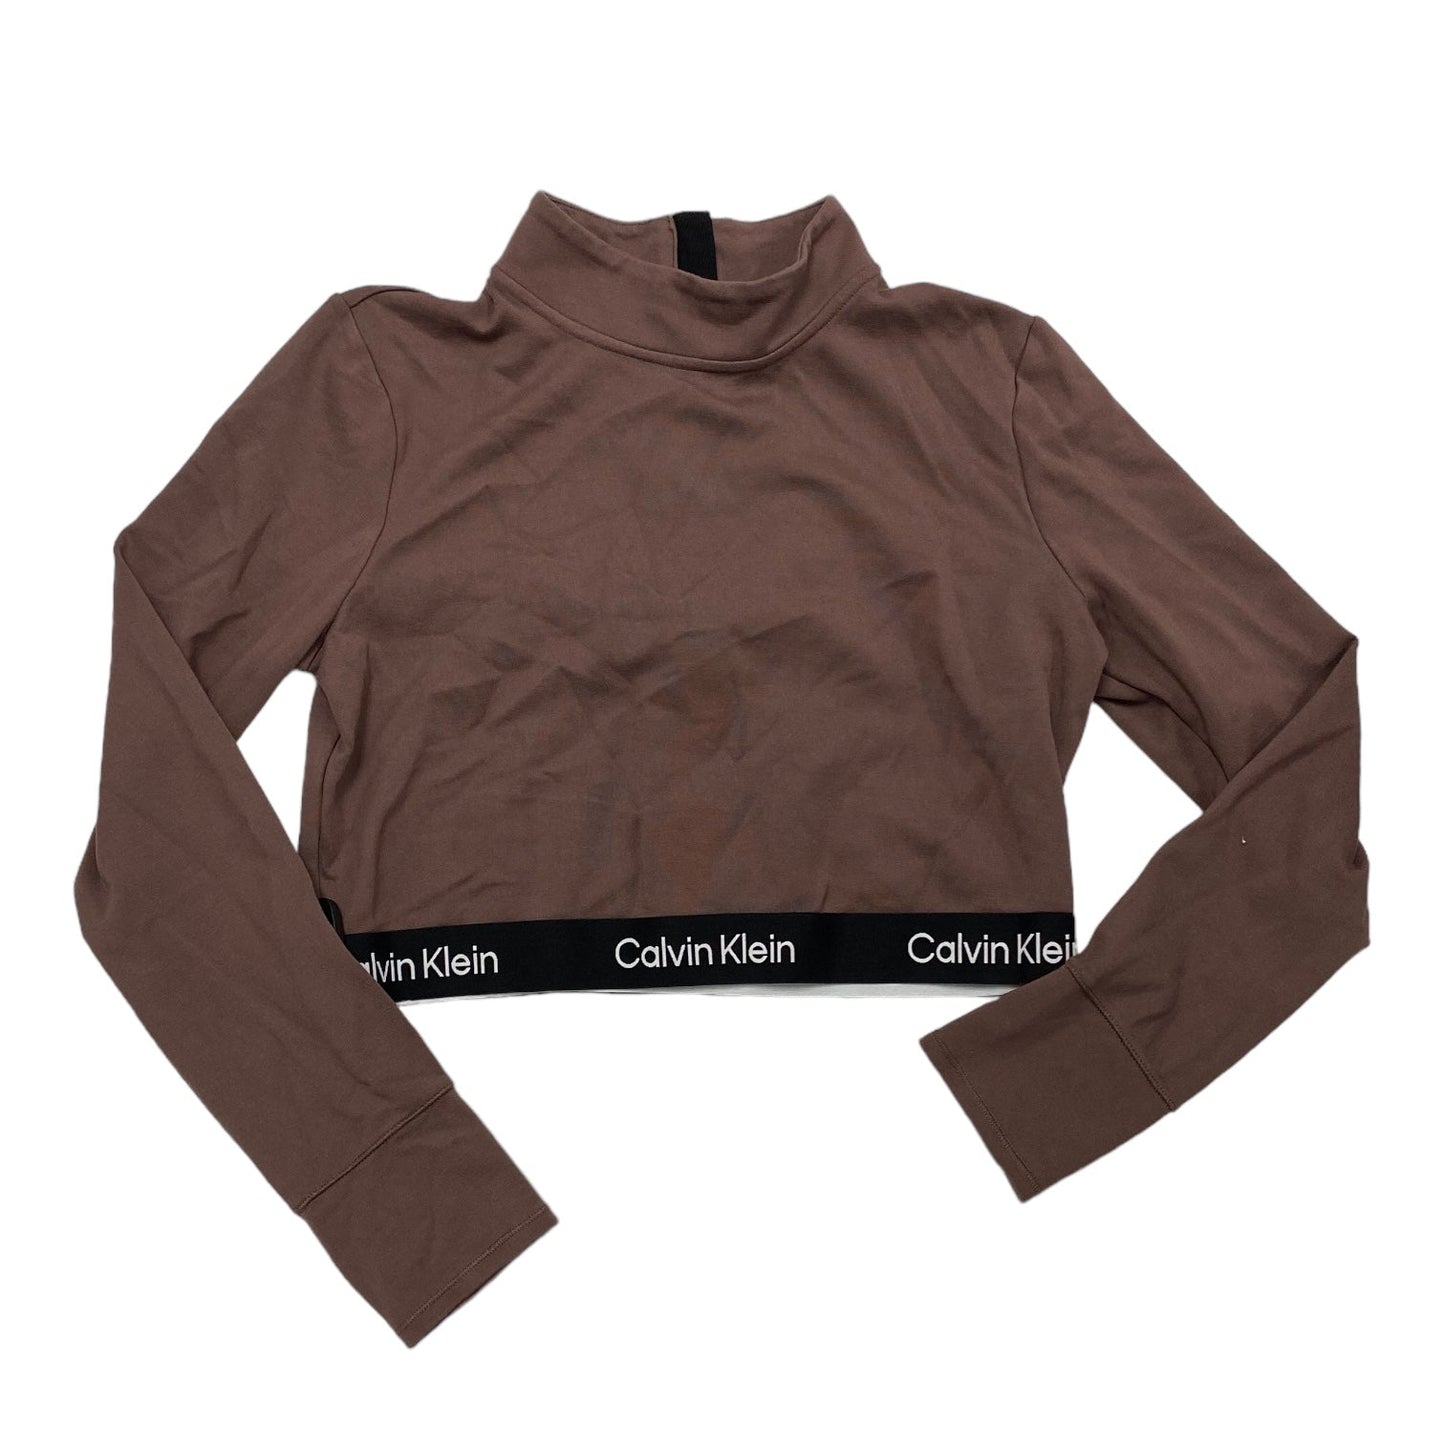 Brown Athletic Top Long Sleeve Crewneck Calvin Klein, Size Xl